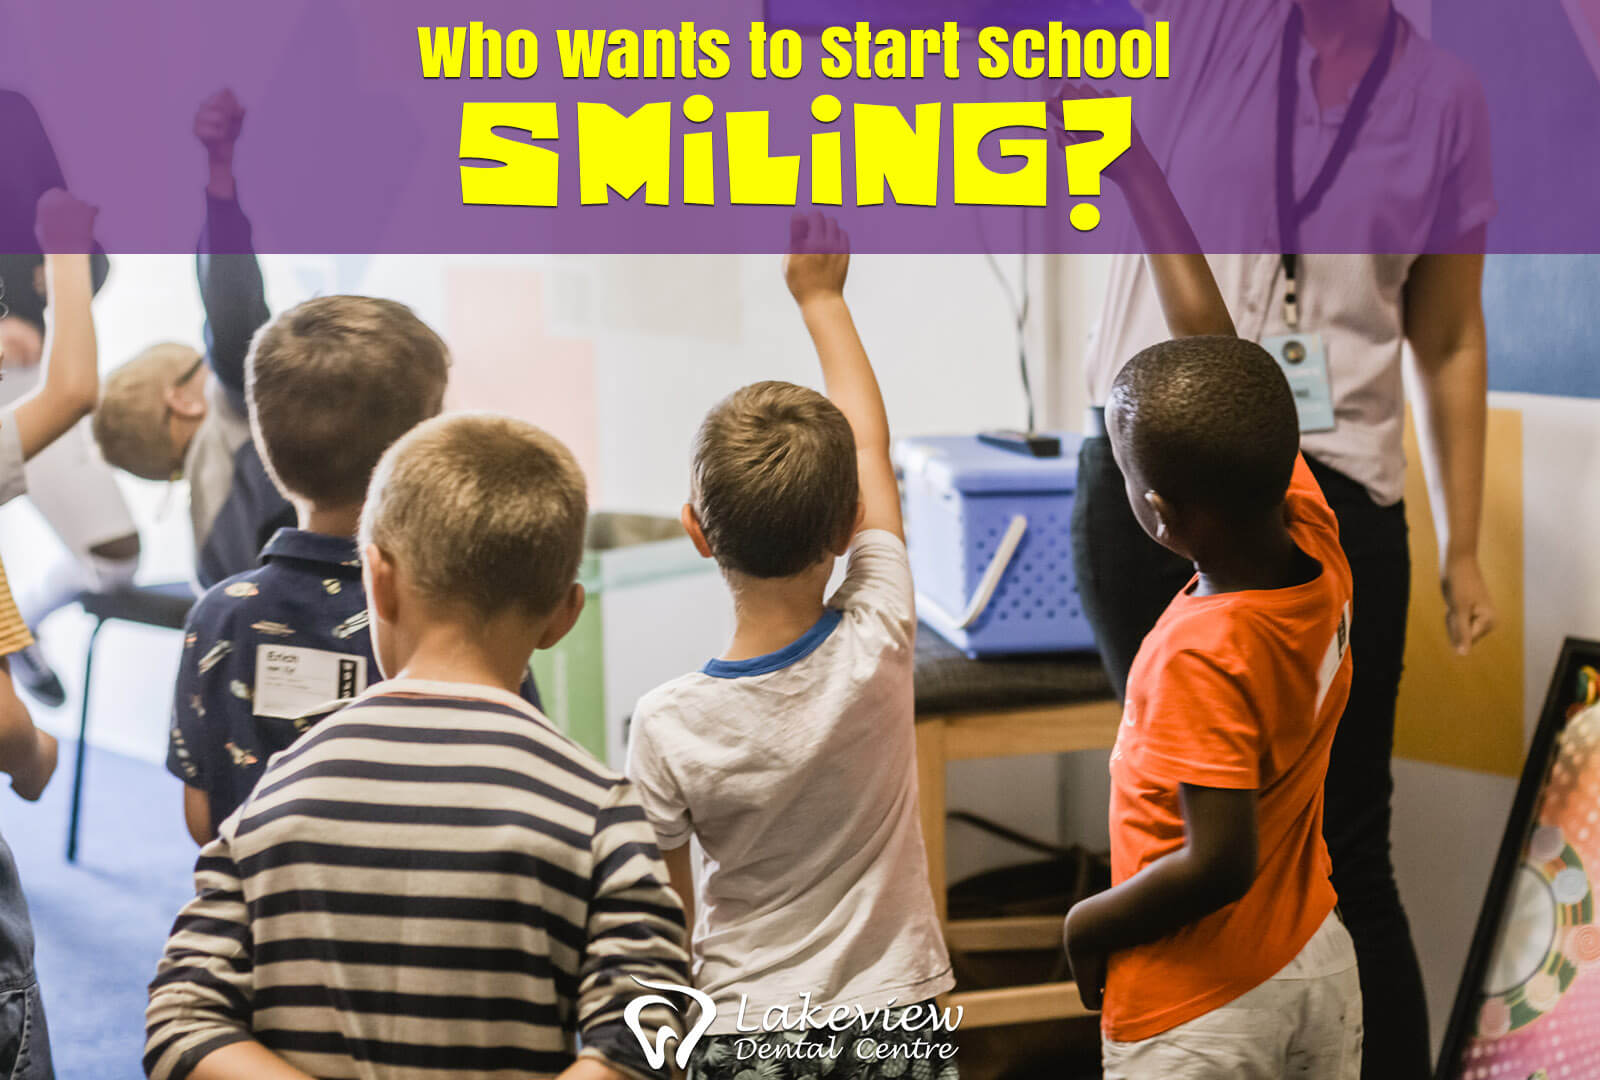 Start school smiling free dental exams calgary alberta 2019